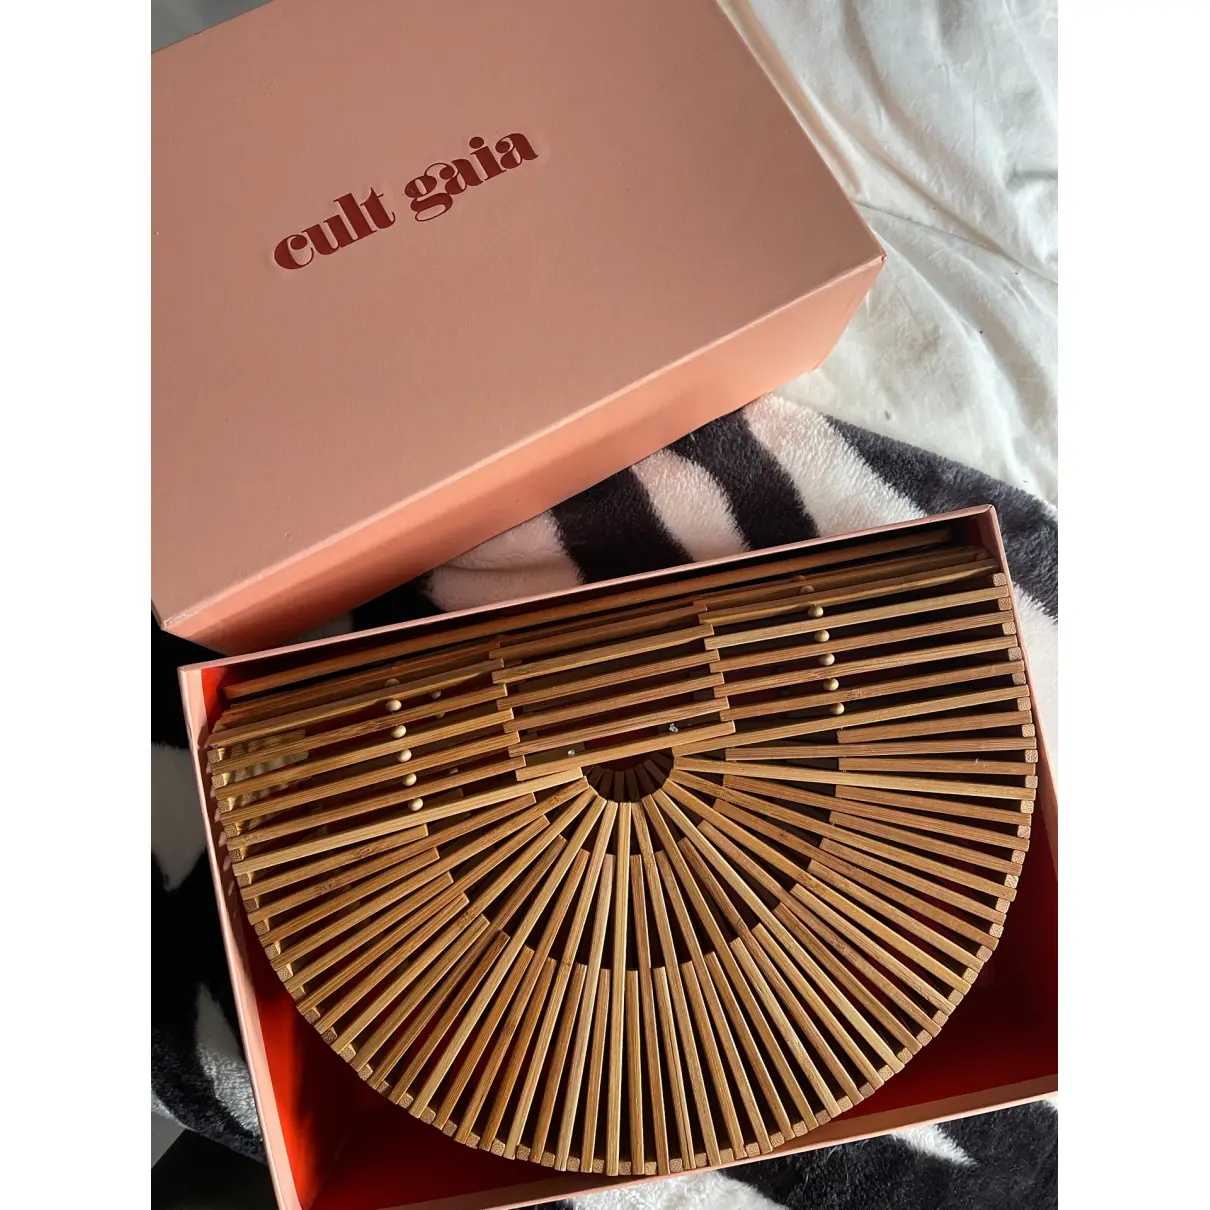 Buy Cult Gaia Clutch bag online